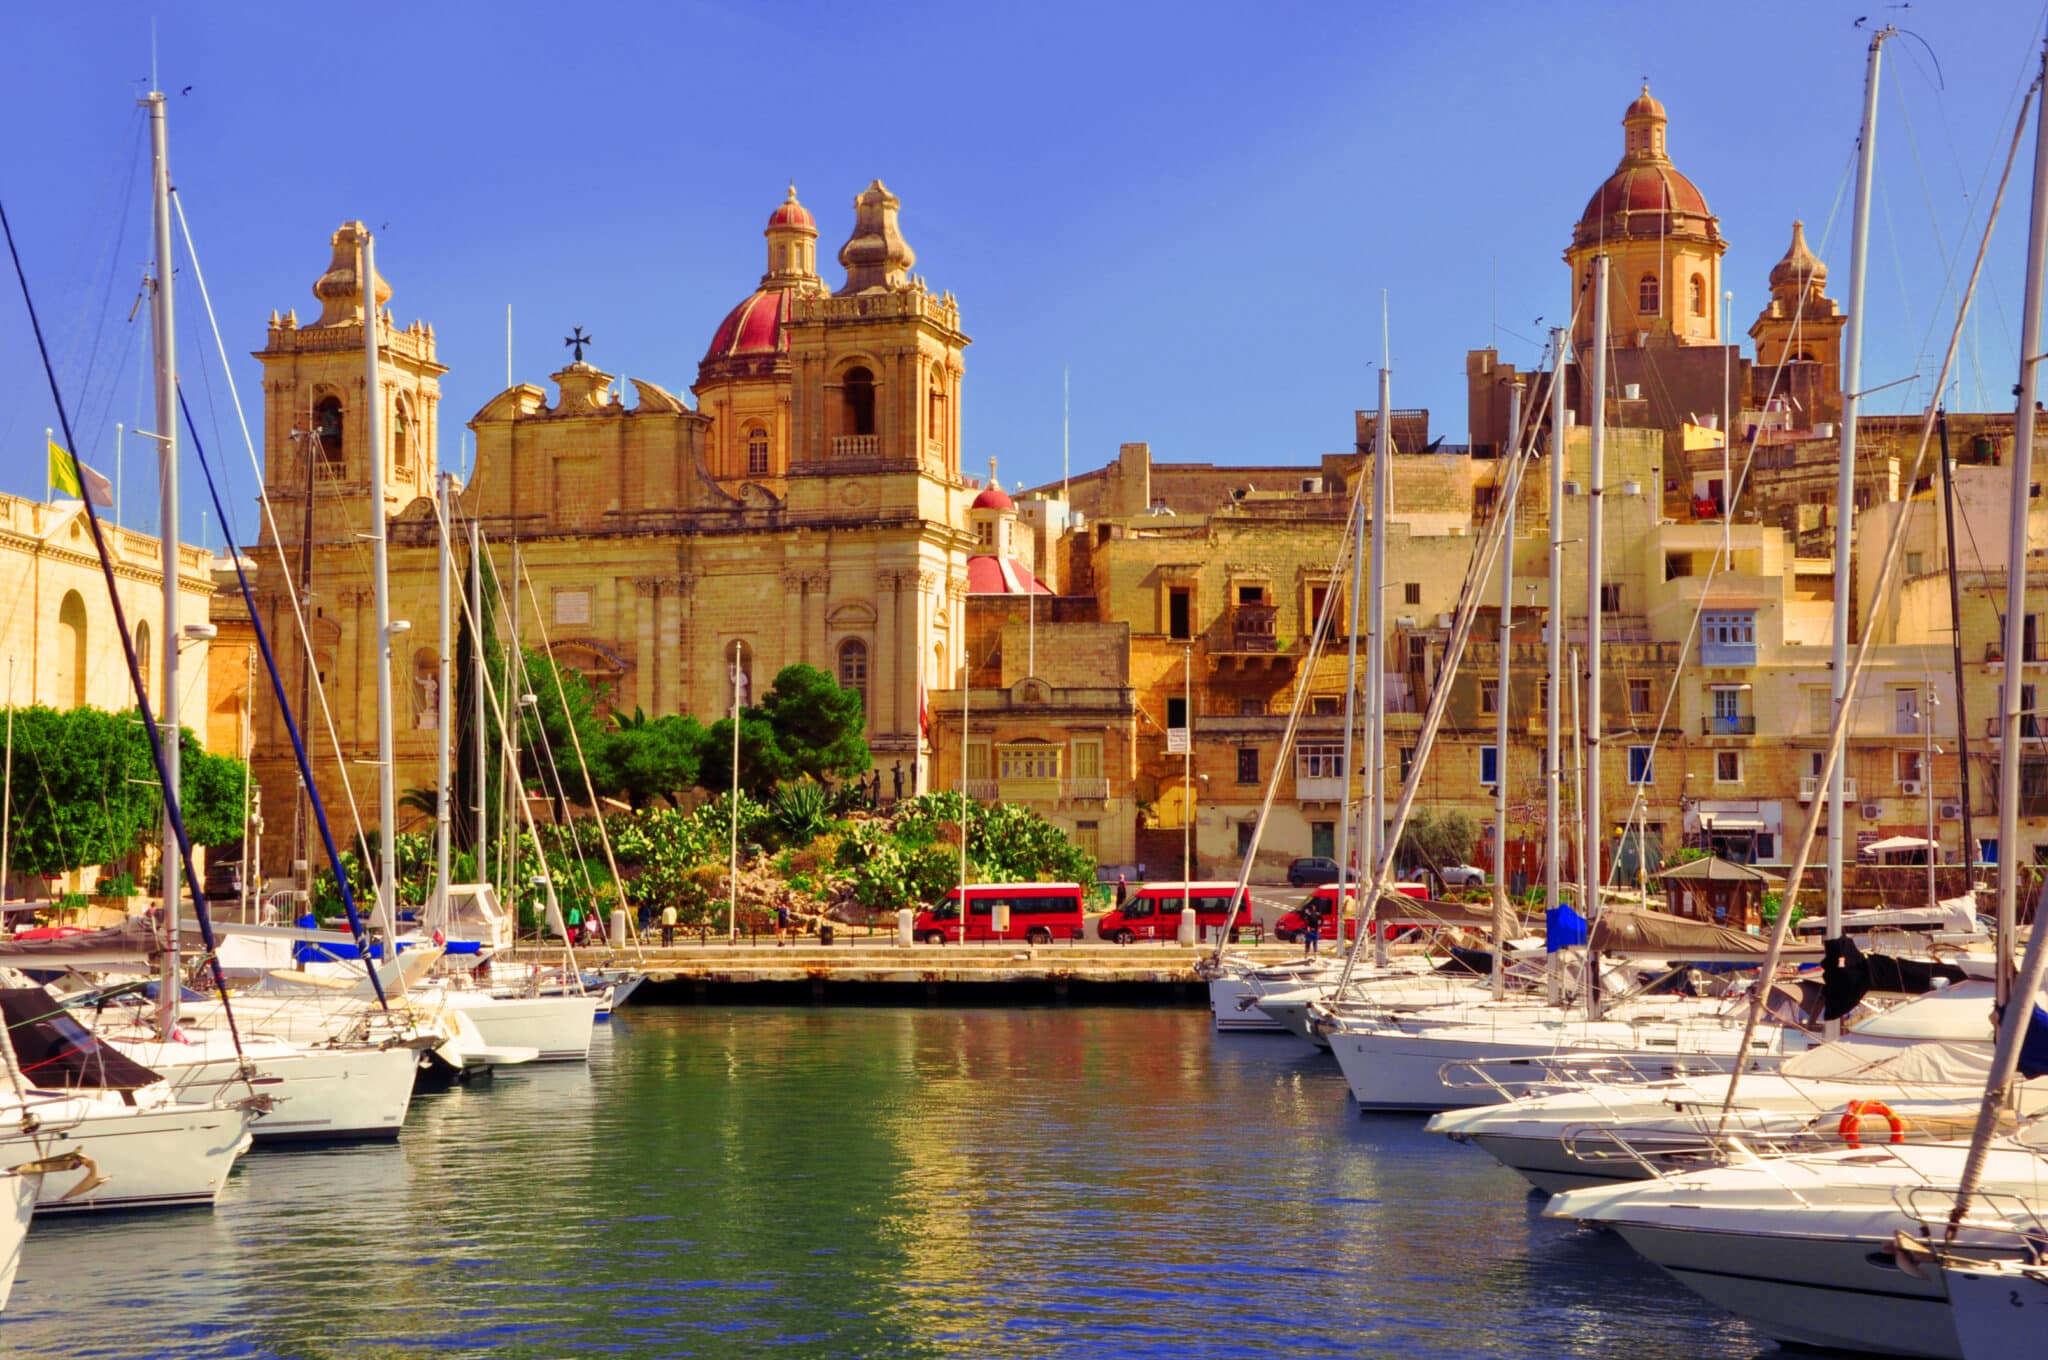 Architecture maltaise et port